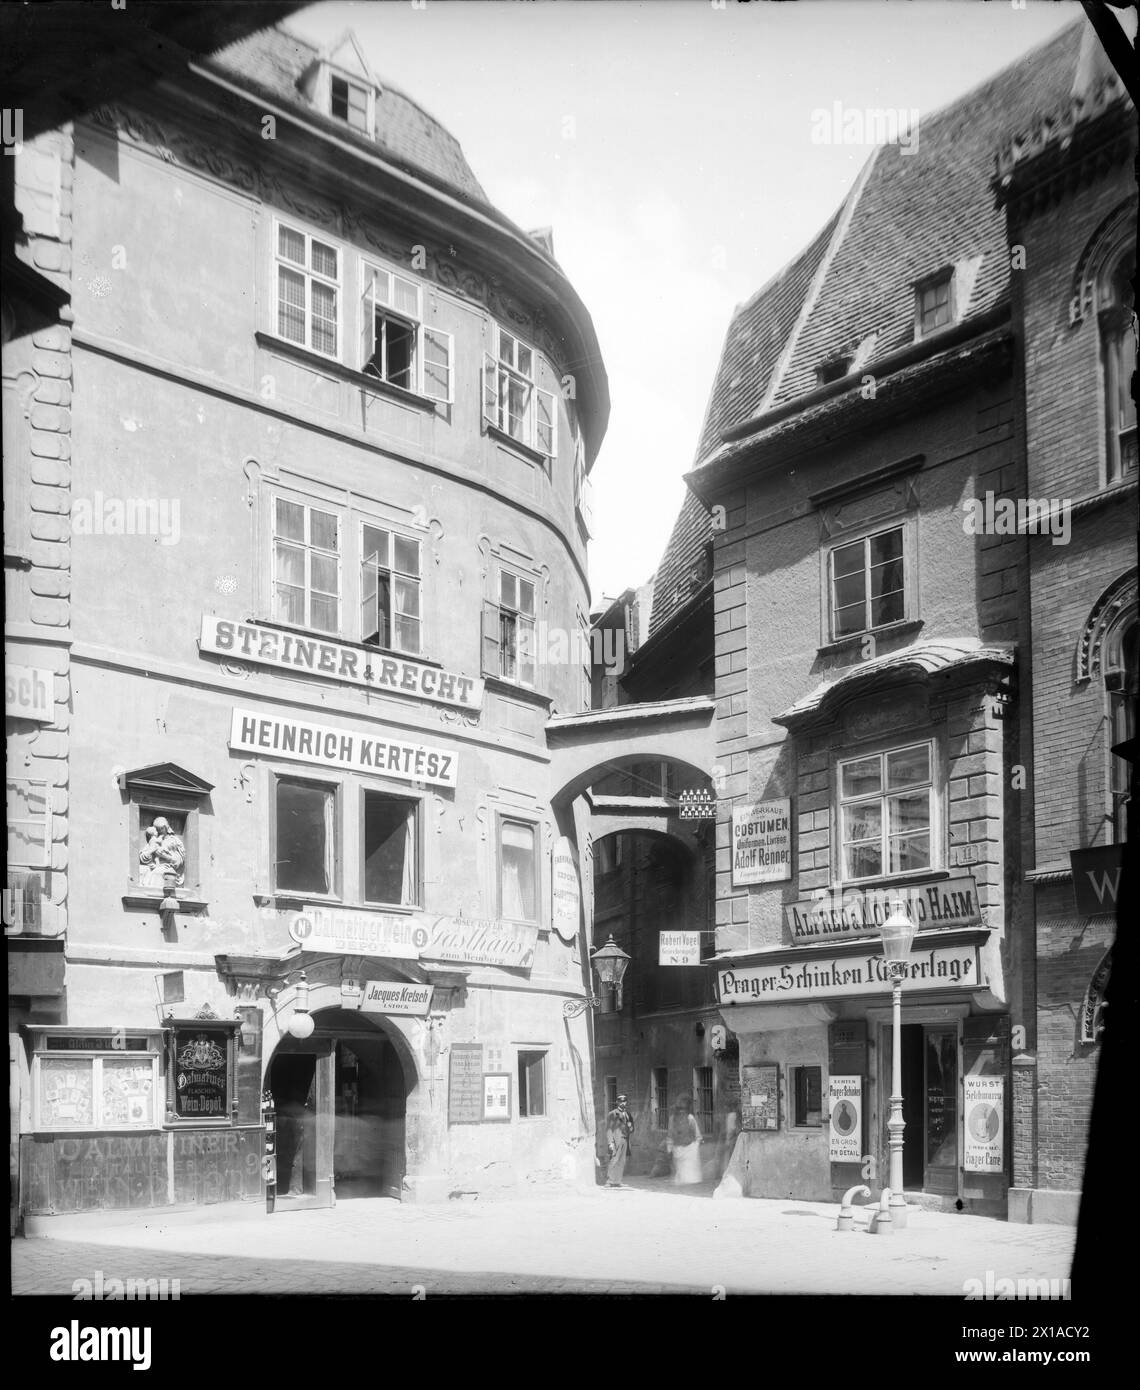 Wien 1, Fleischmarkt 9/11, Insight in the Griechengasse (Griechengasse), 1898 - 18980101 PD0682 - Rechteinfo: Rights Managed (RM) Stockfoto